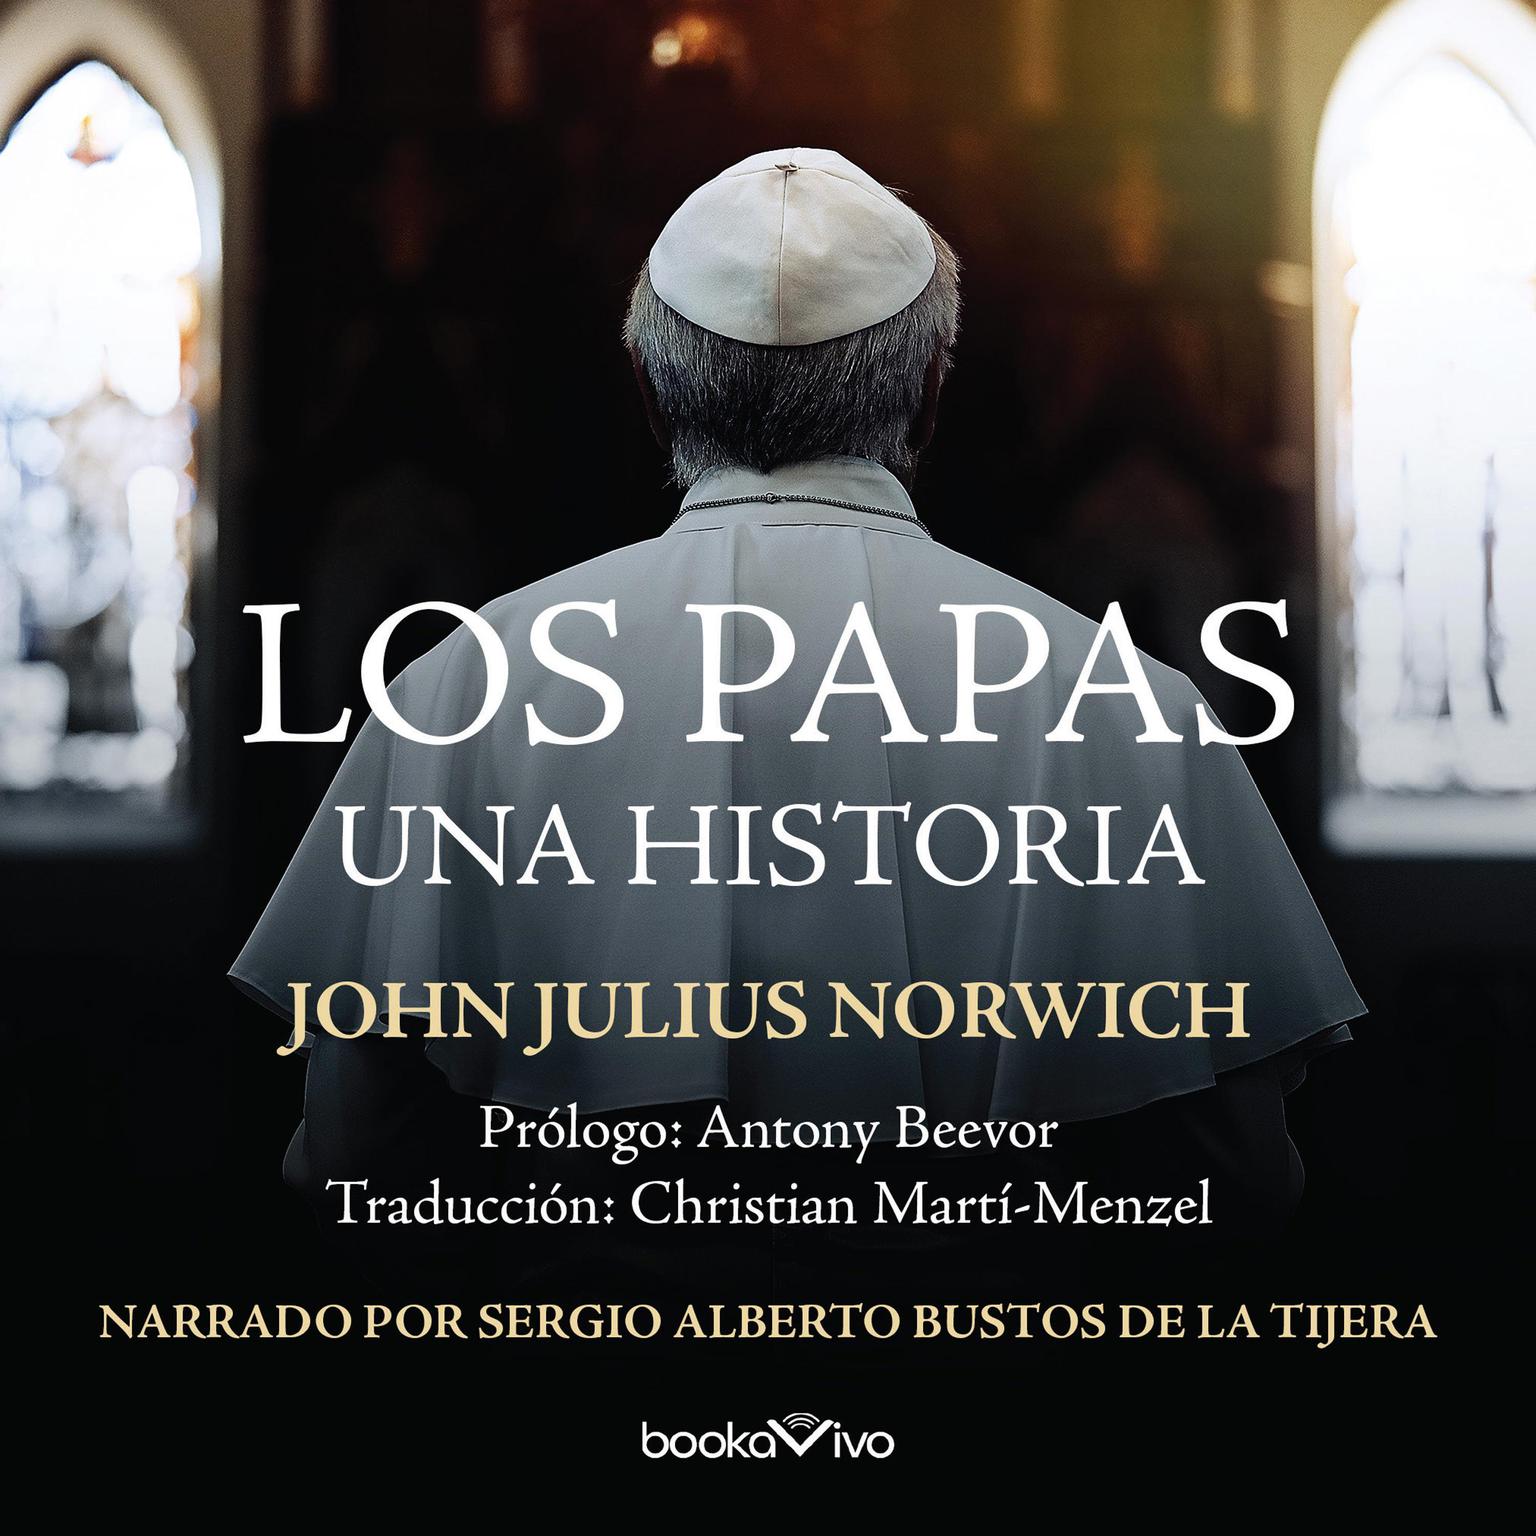 Los Papas (The Popes): Una historia (A History) Audiobook, by John Julius Norwich